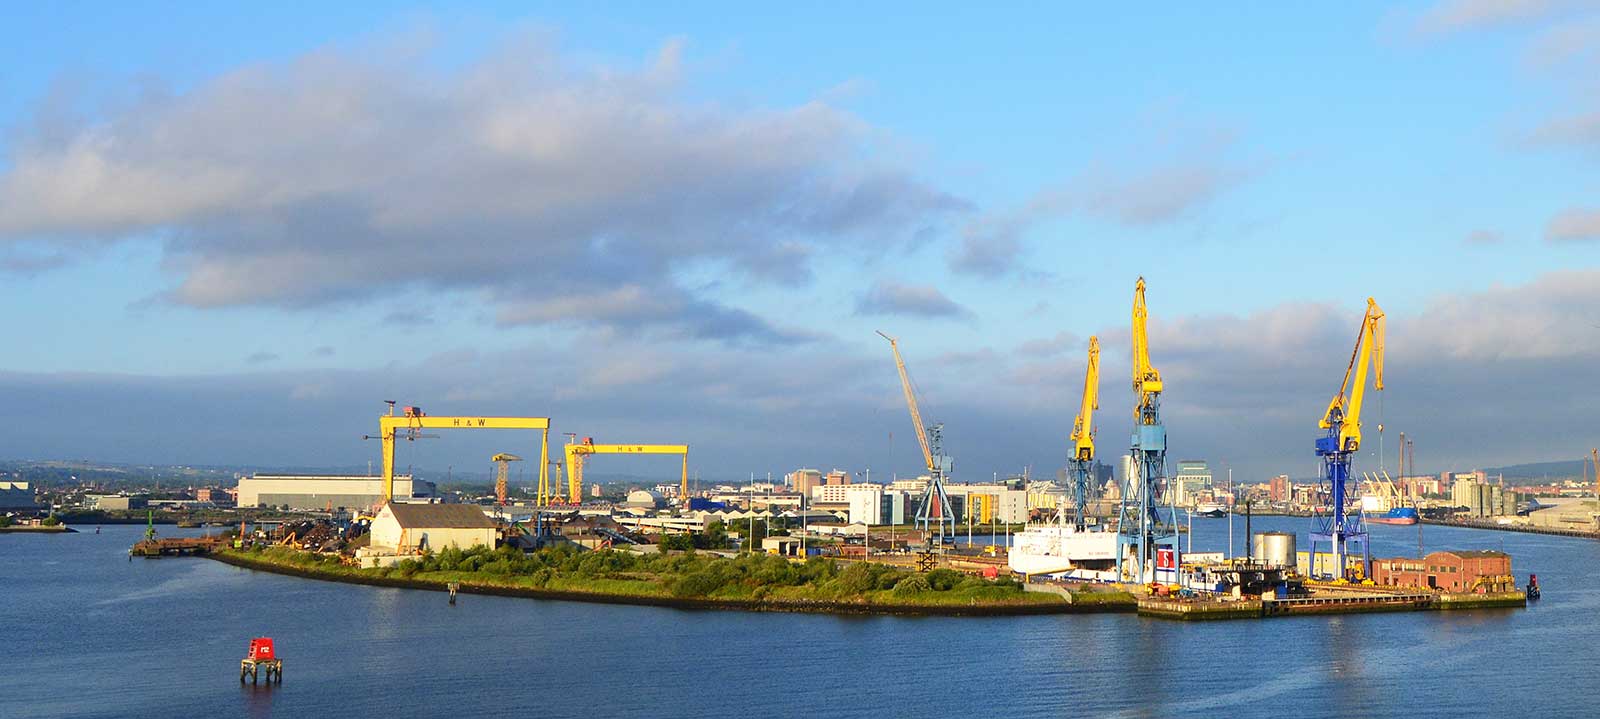 Belfast: Cranes, Bears, and Urban Wonders